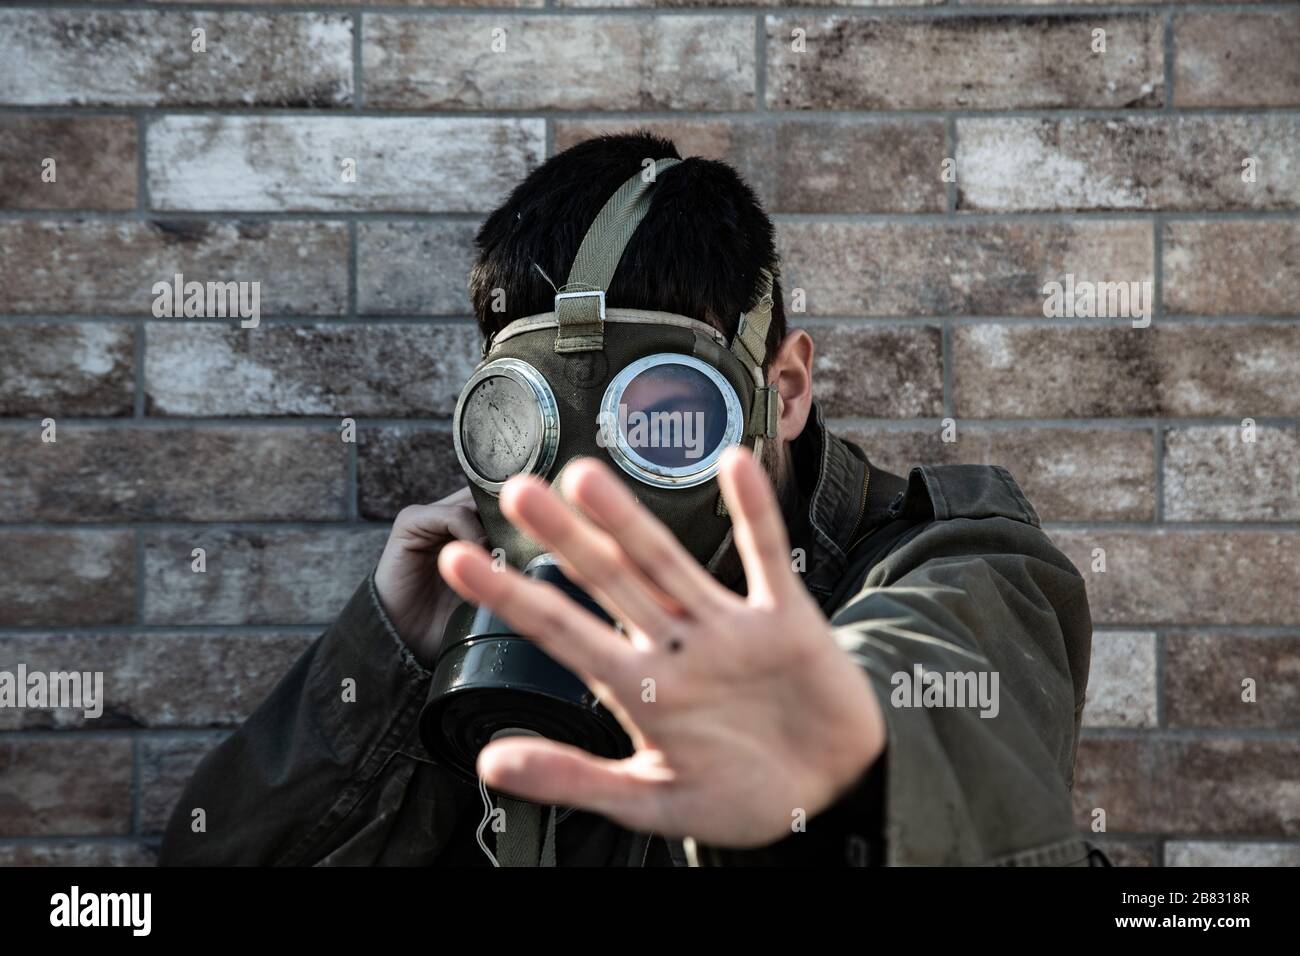 Gas Mask fear chimical batteric scared corona Stock Photo